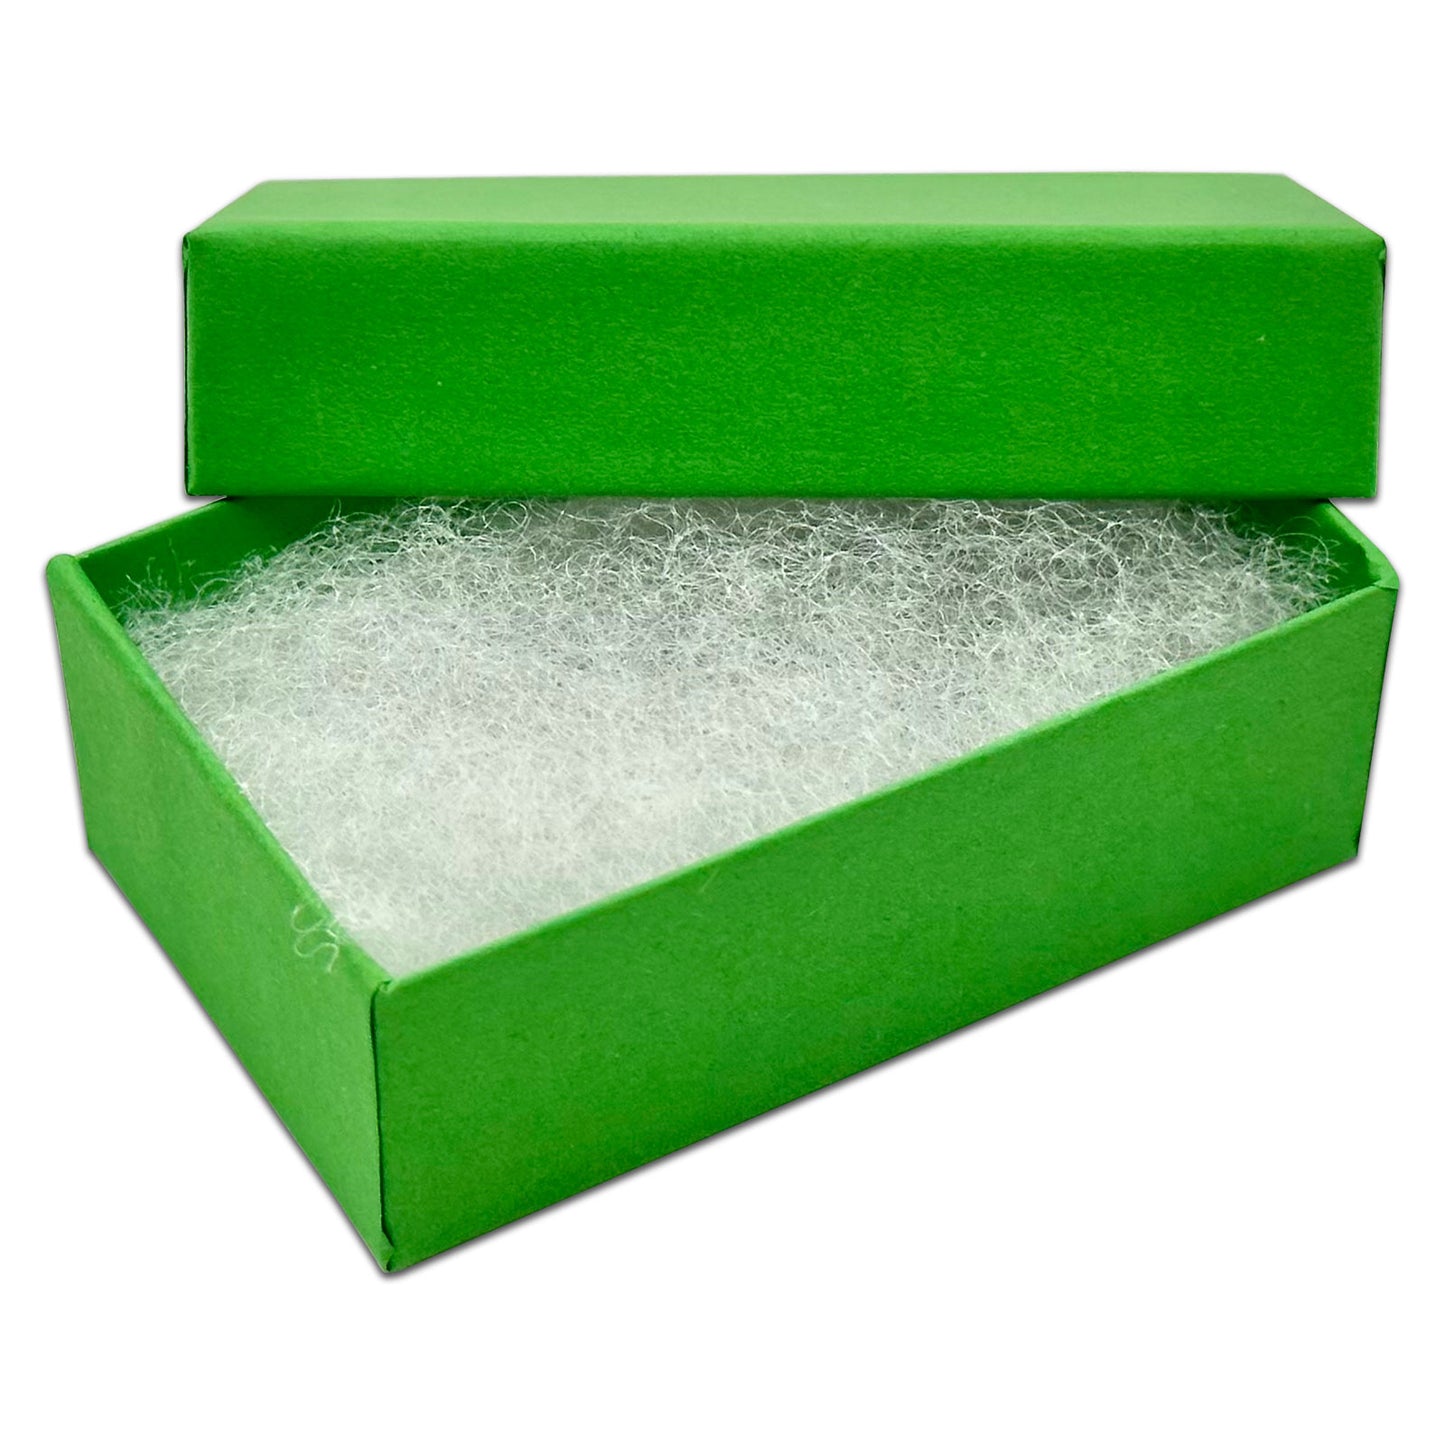 2 5/8" x 1 5/8" x 1" Light Green Cotton Filled Paper Box